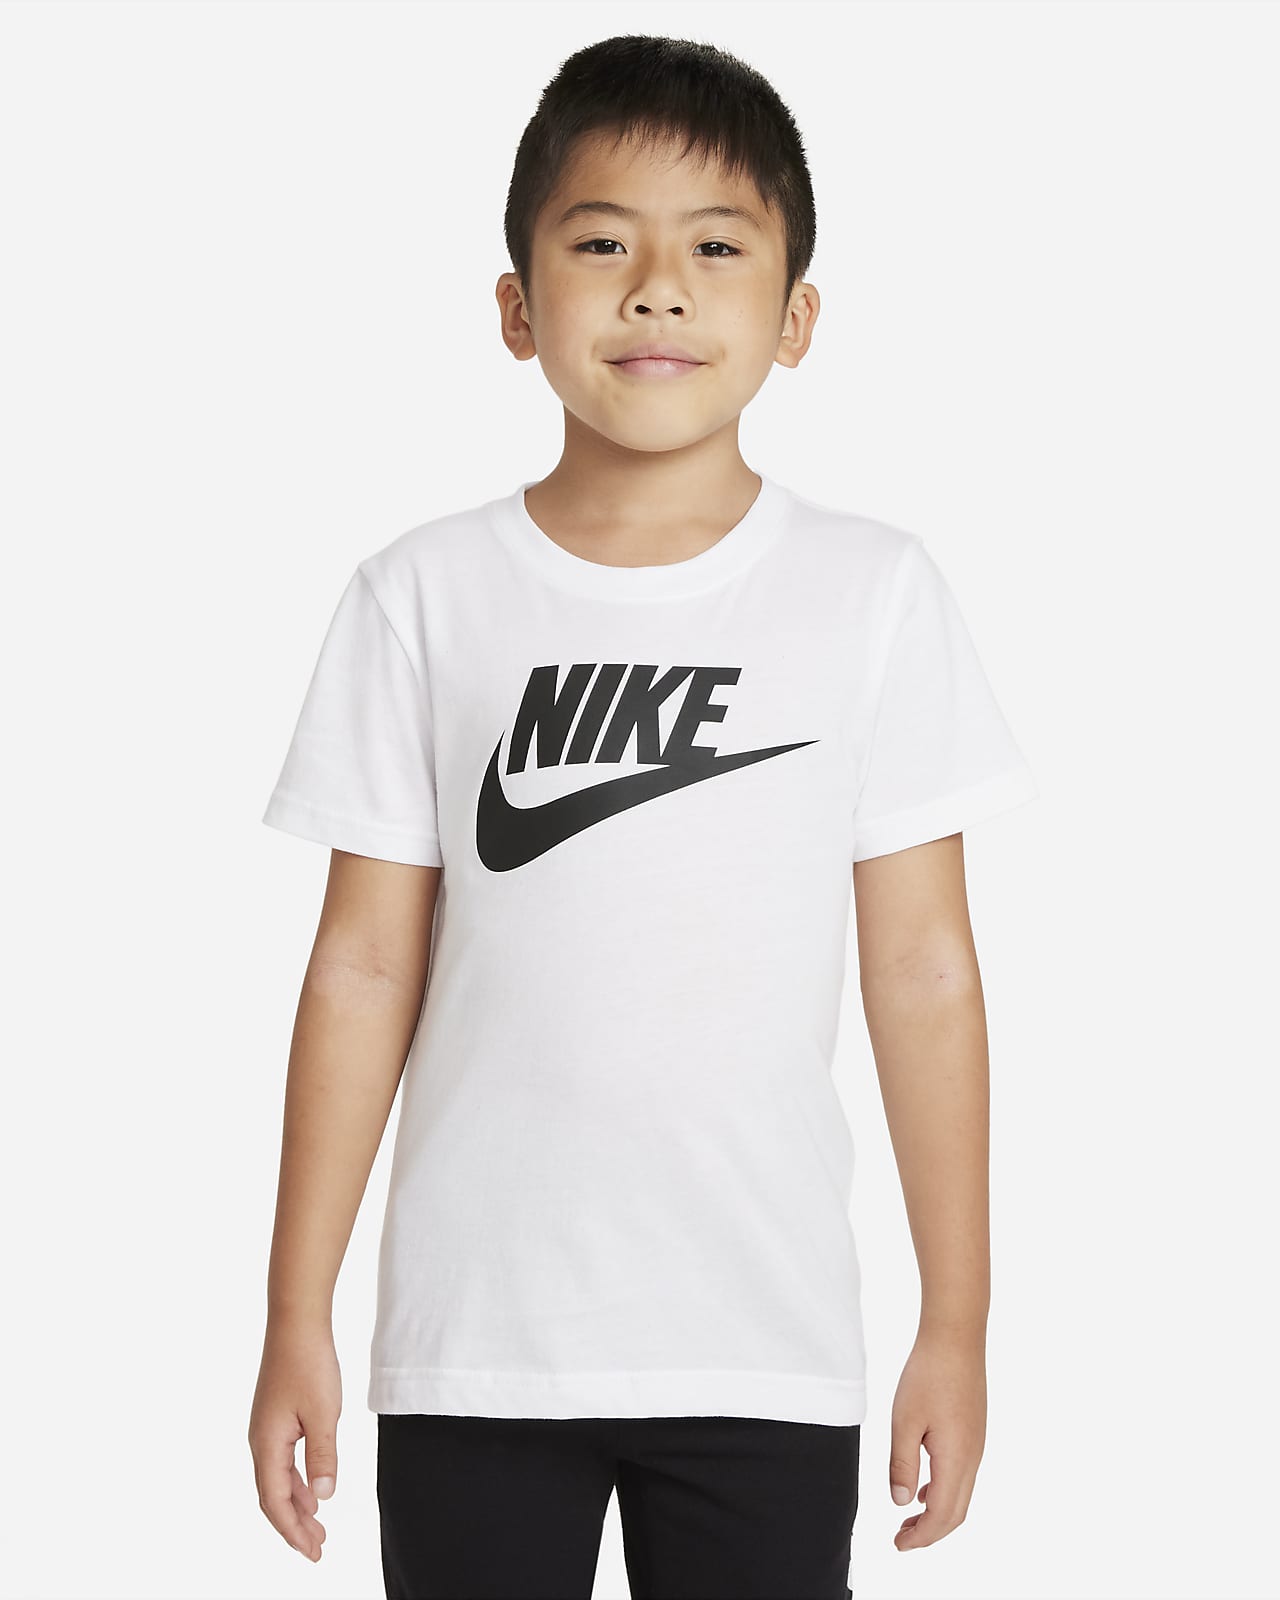 Nike-T-shirt til børn. Nike